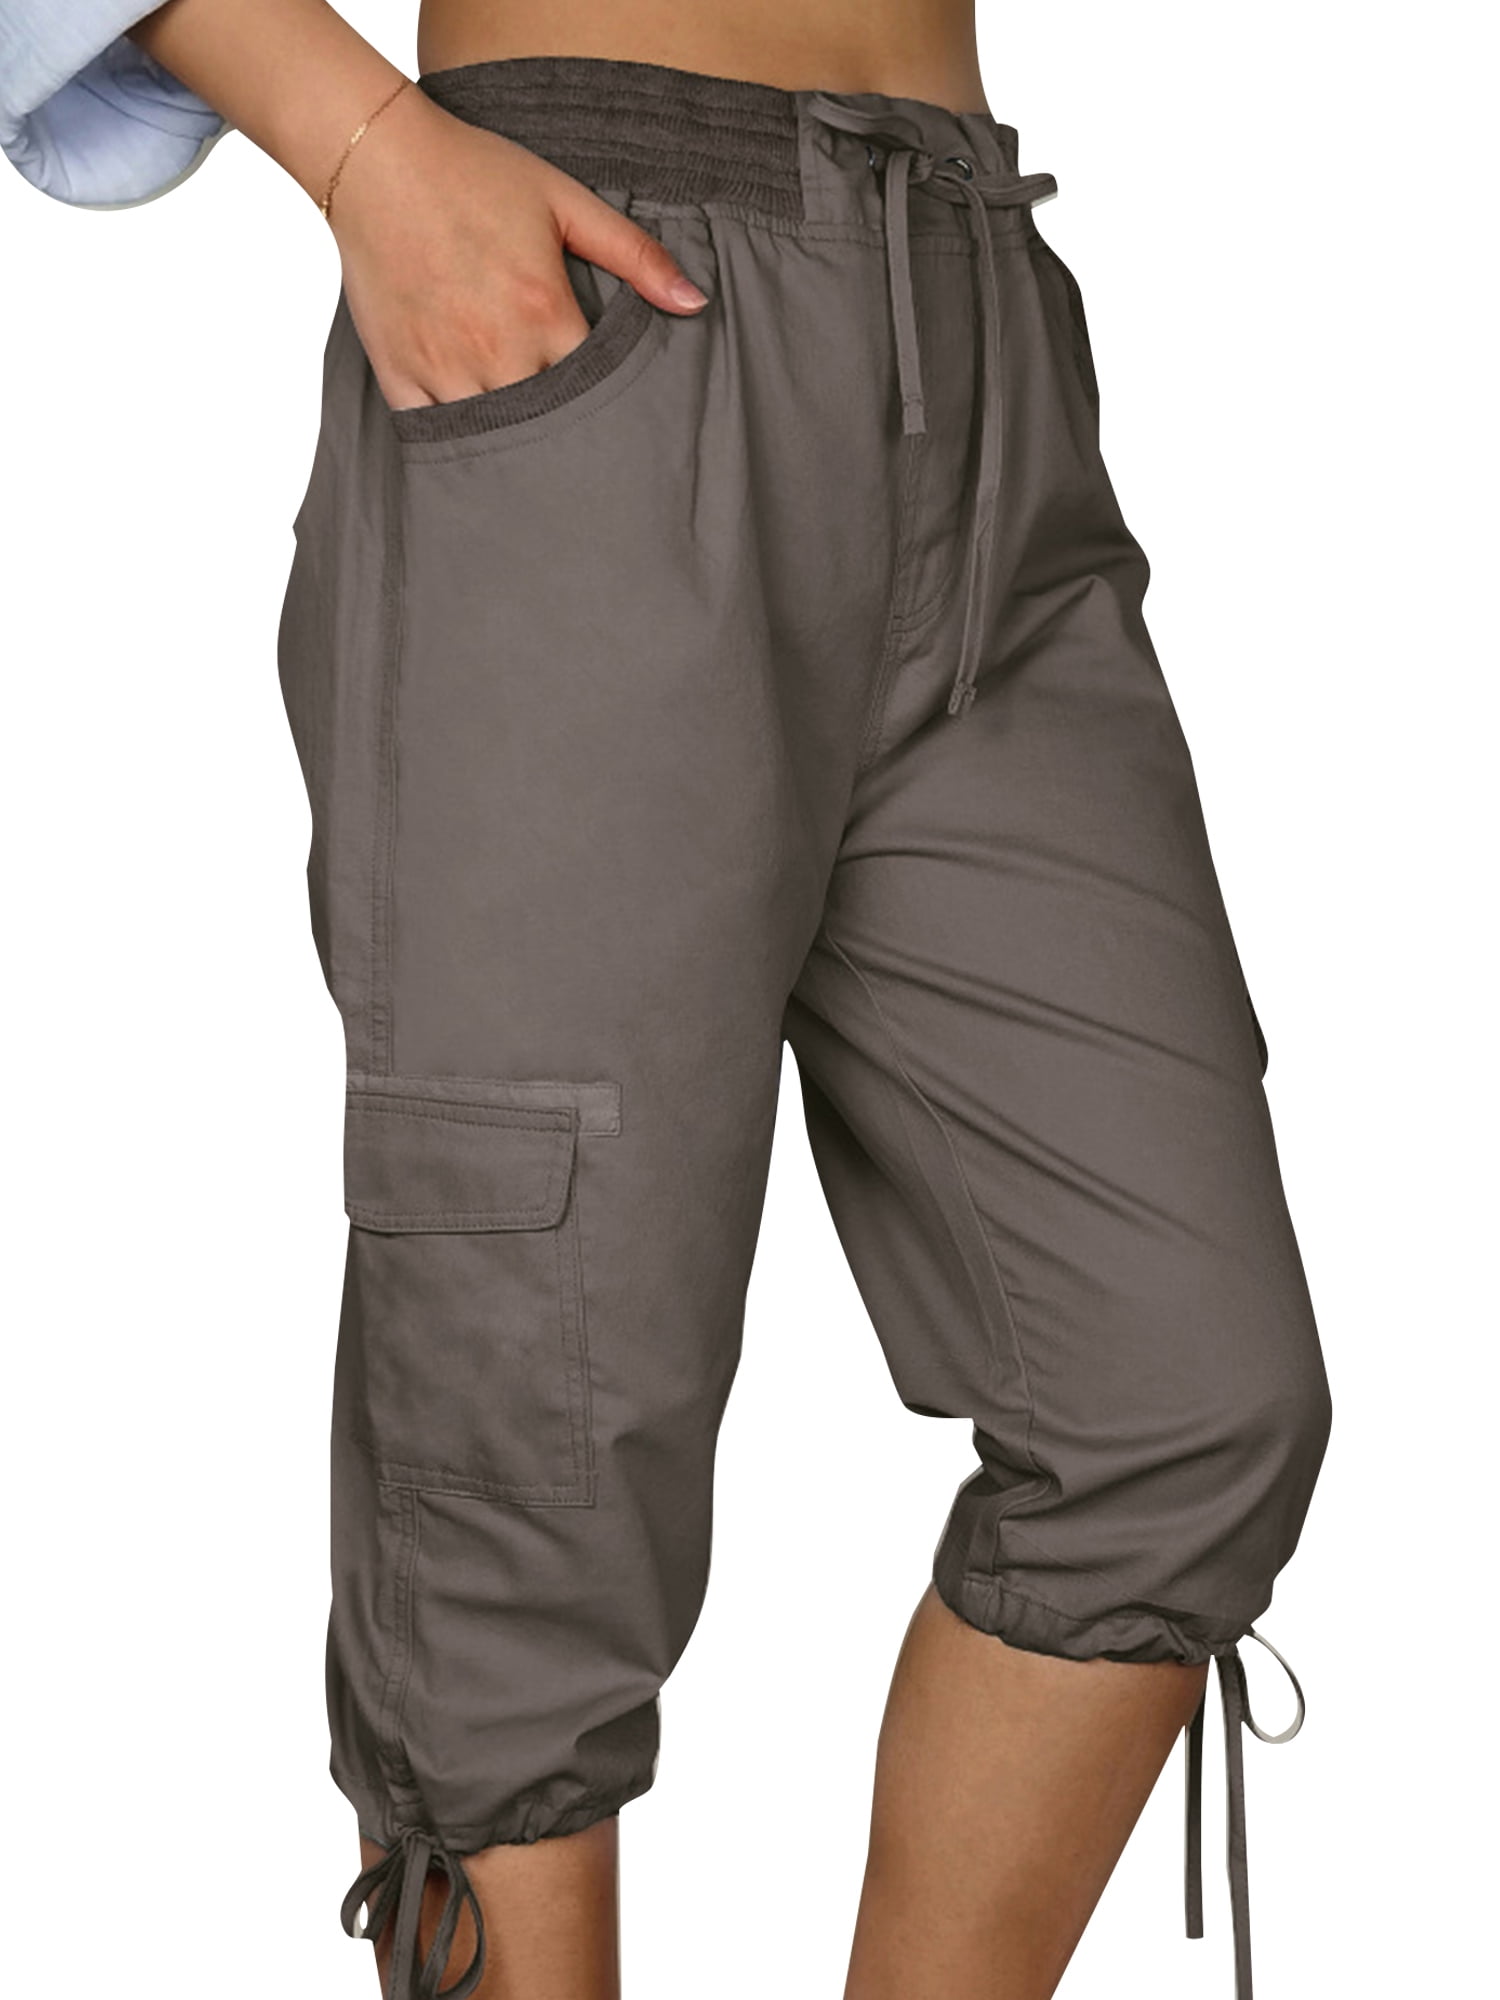 Zipped Pockets Ksmien Women's Lightweight Hiking Capri Pants Quick Dry Workout Cargo Capris Water Resistant UPF 50 